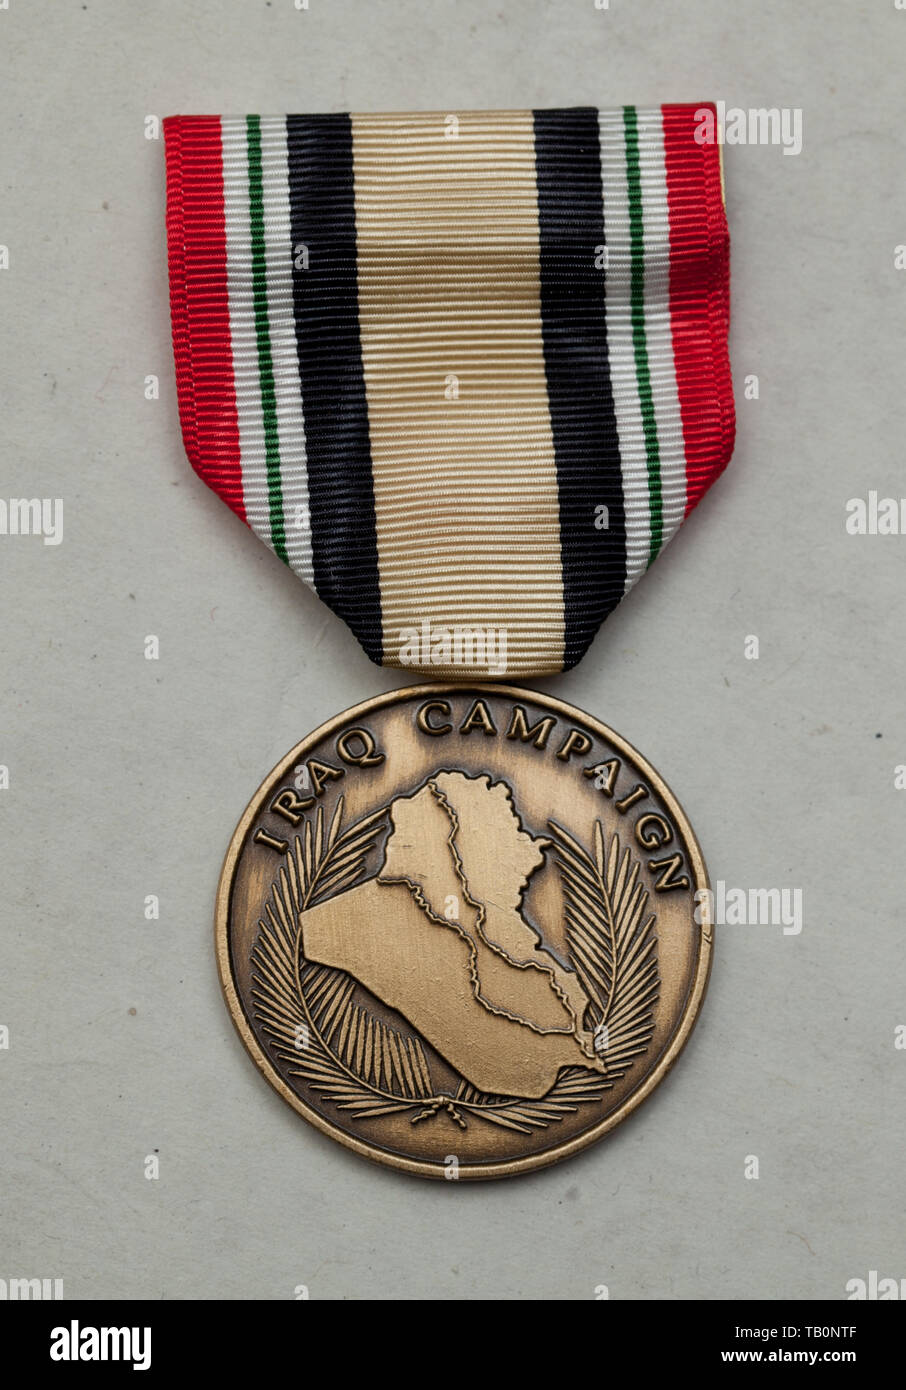 Operation Iraqi Freedom medal Stock Photo